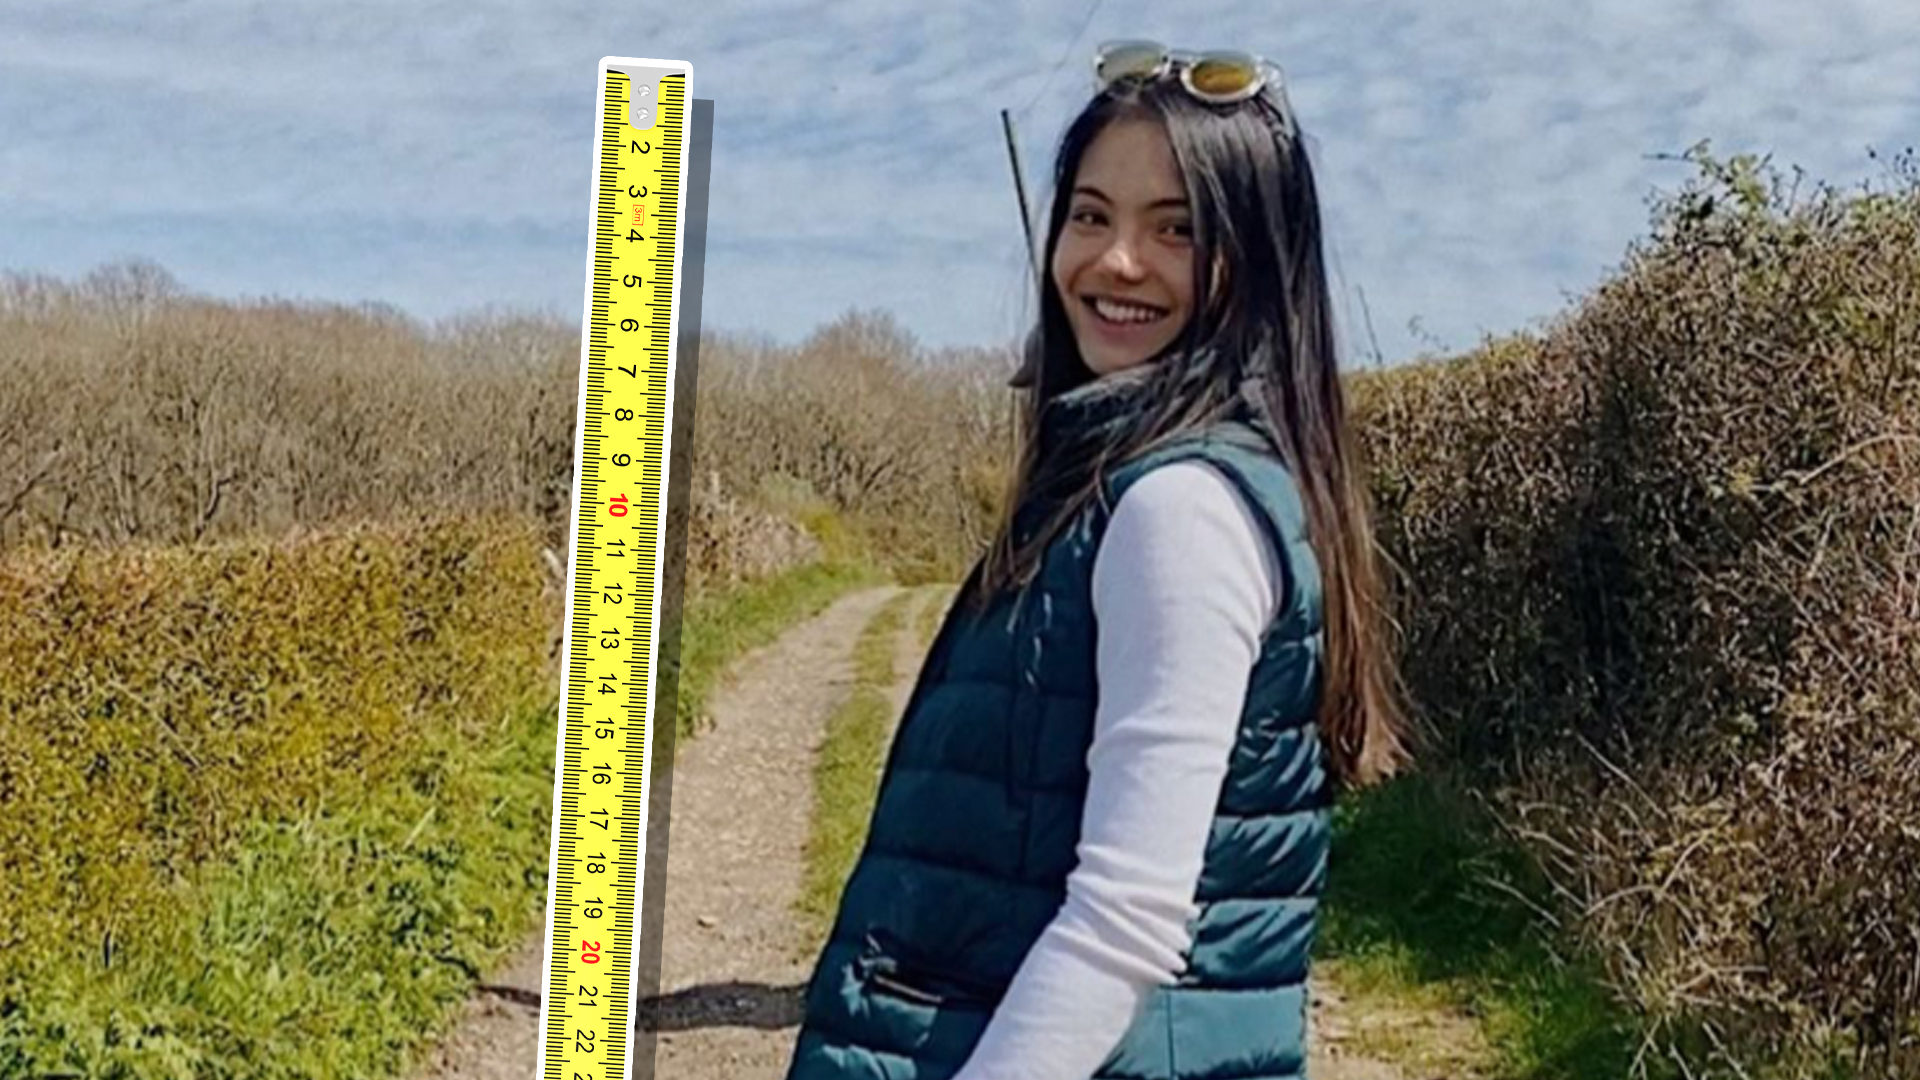 Emma Raducanu walking down a country road alongside a measuring tape